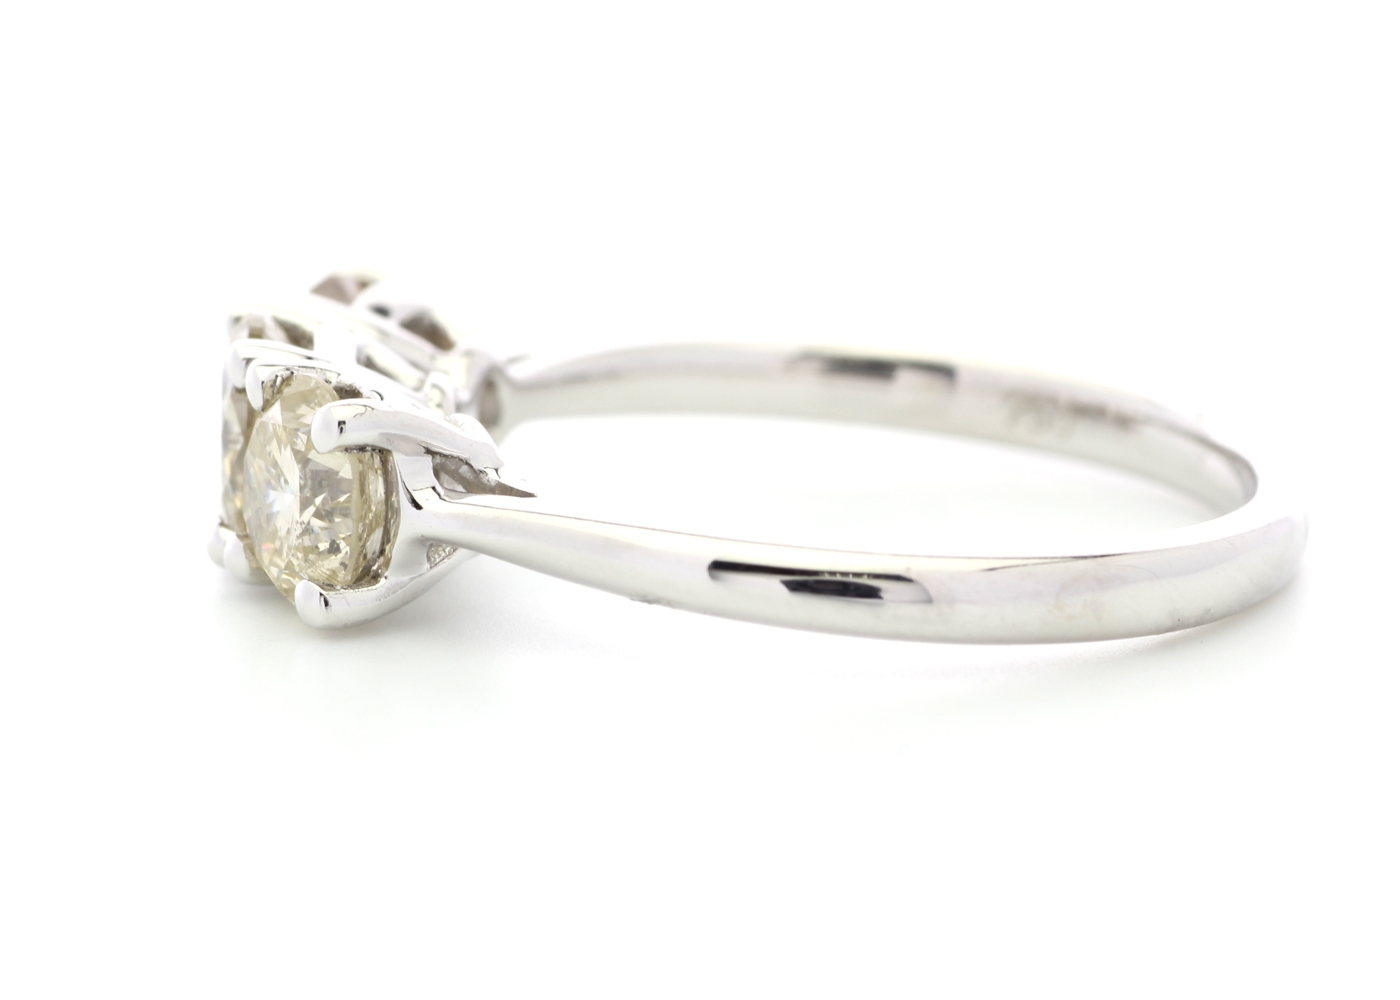 18k White Gold Three Stone Diamond Ring 1.58 Carats - Image 2 of 5